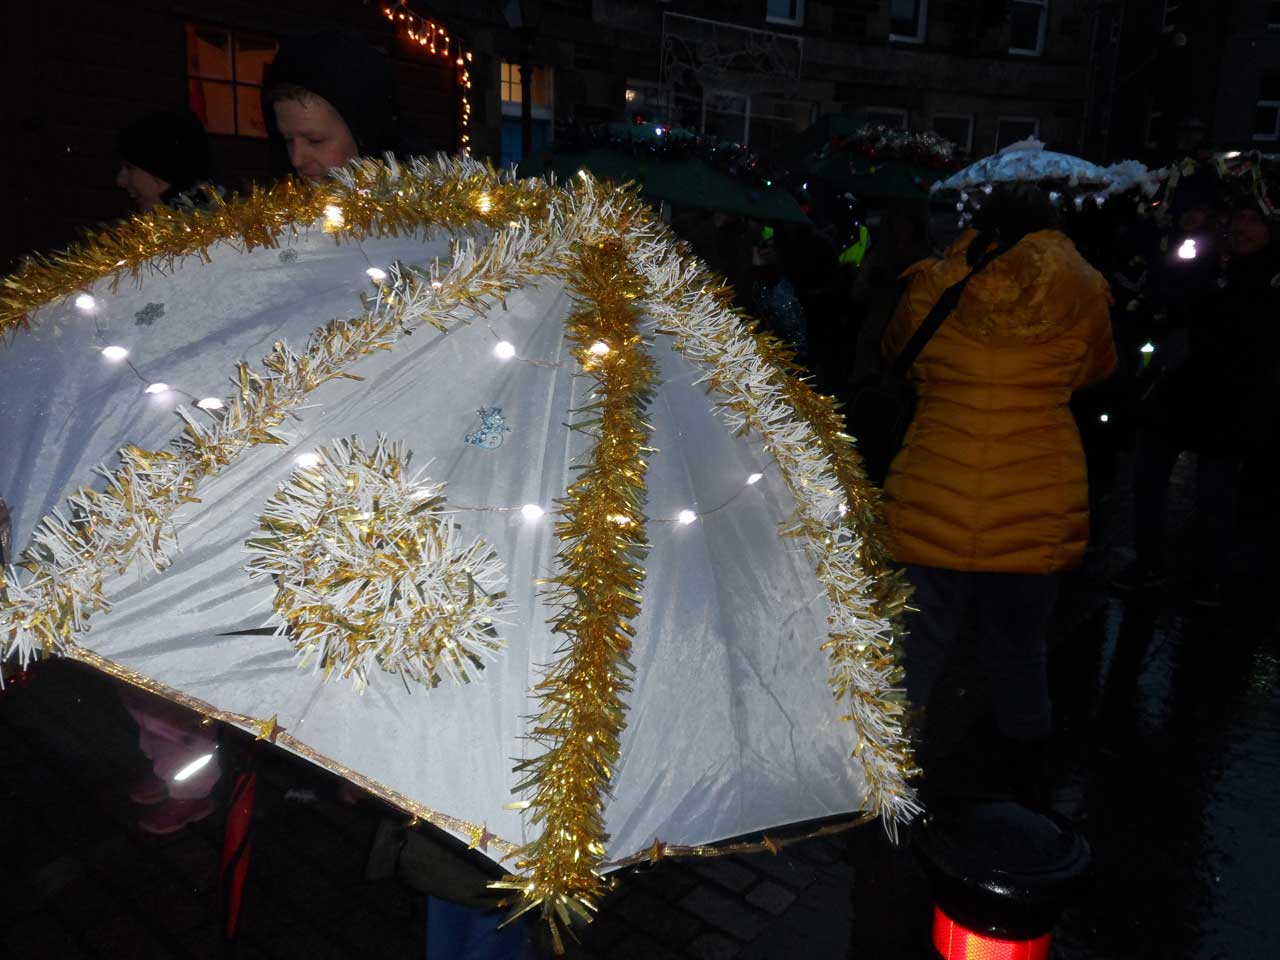 Photo: Christmas Umbrella Parade In Wick